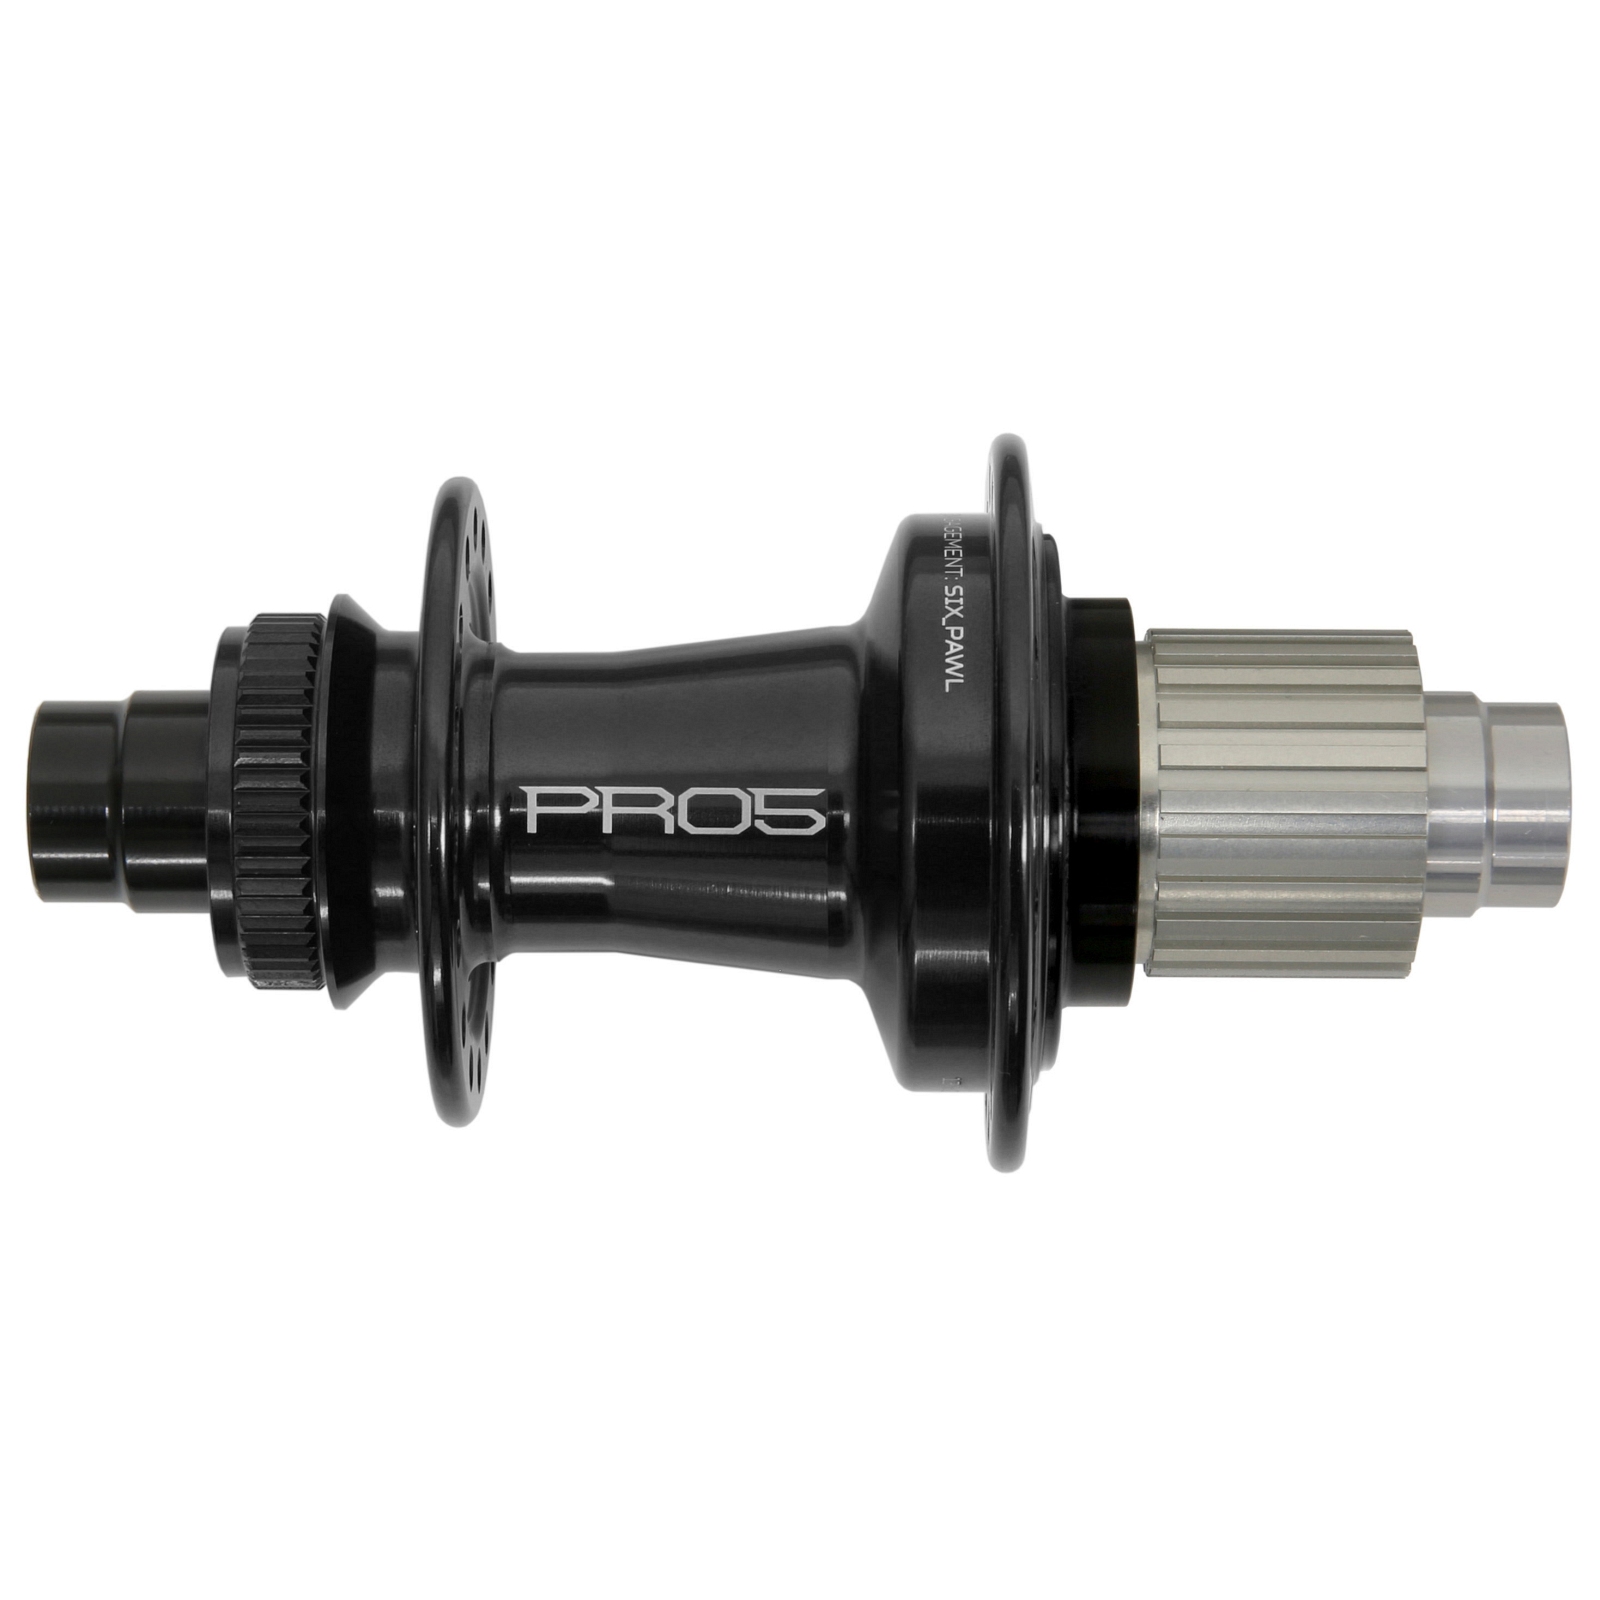 Picture of Hope Pro 5 Rear Hub - Centerlock - 12x142mm | Shimano Micro Spline - black